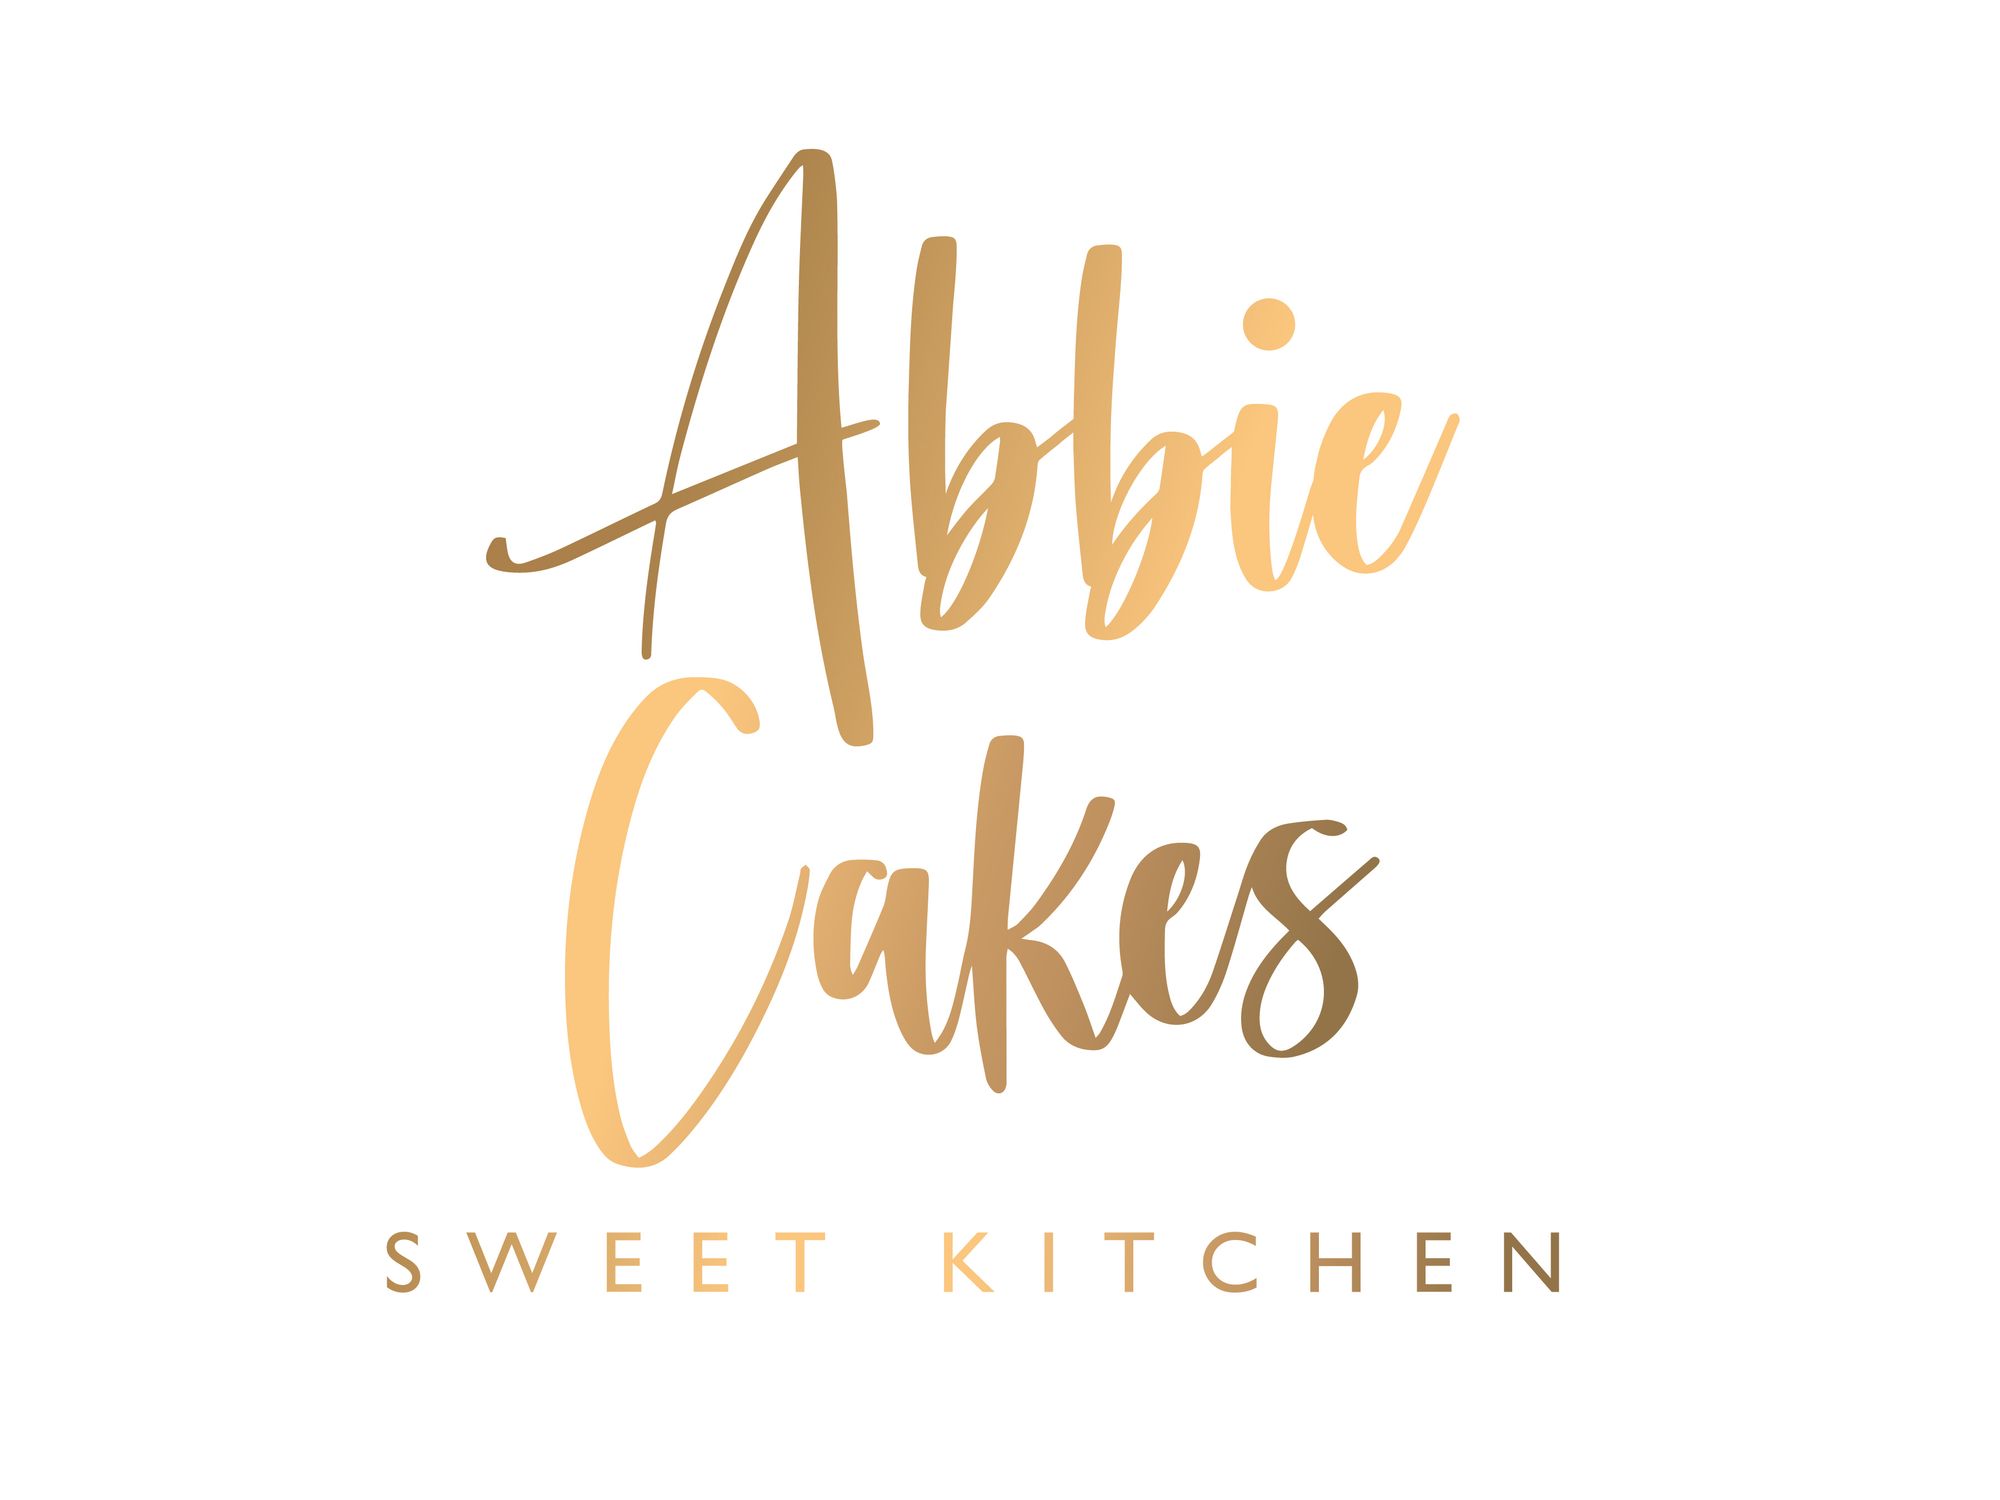 The Sweet Kitchen - Abbie Cakes